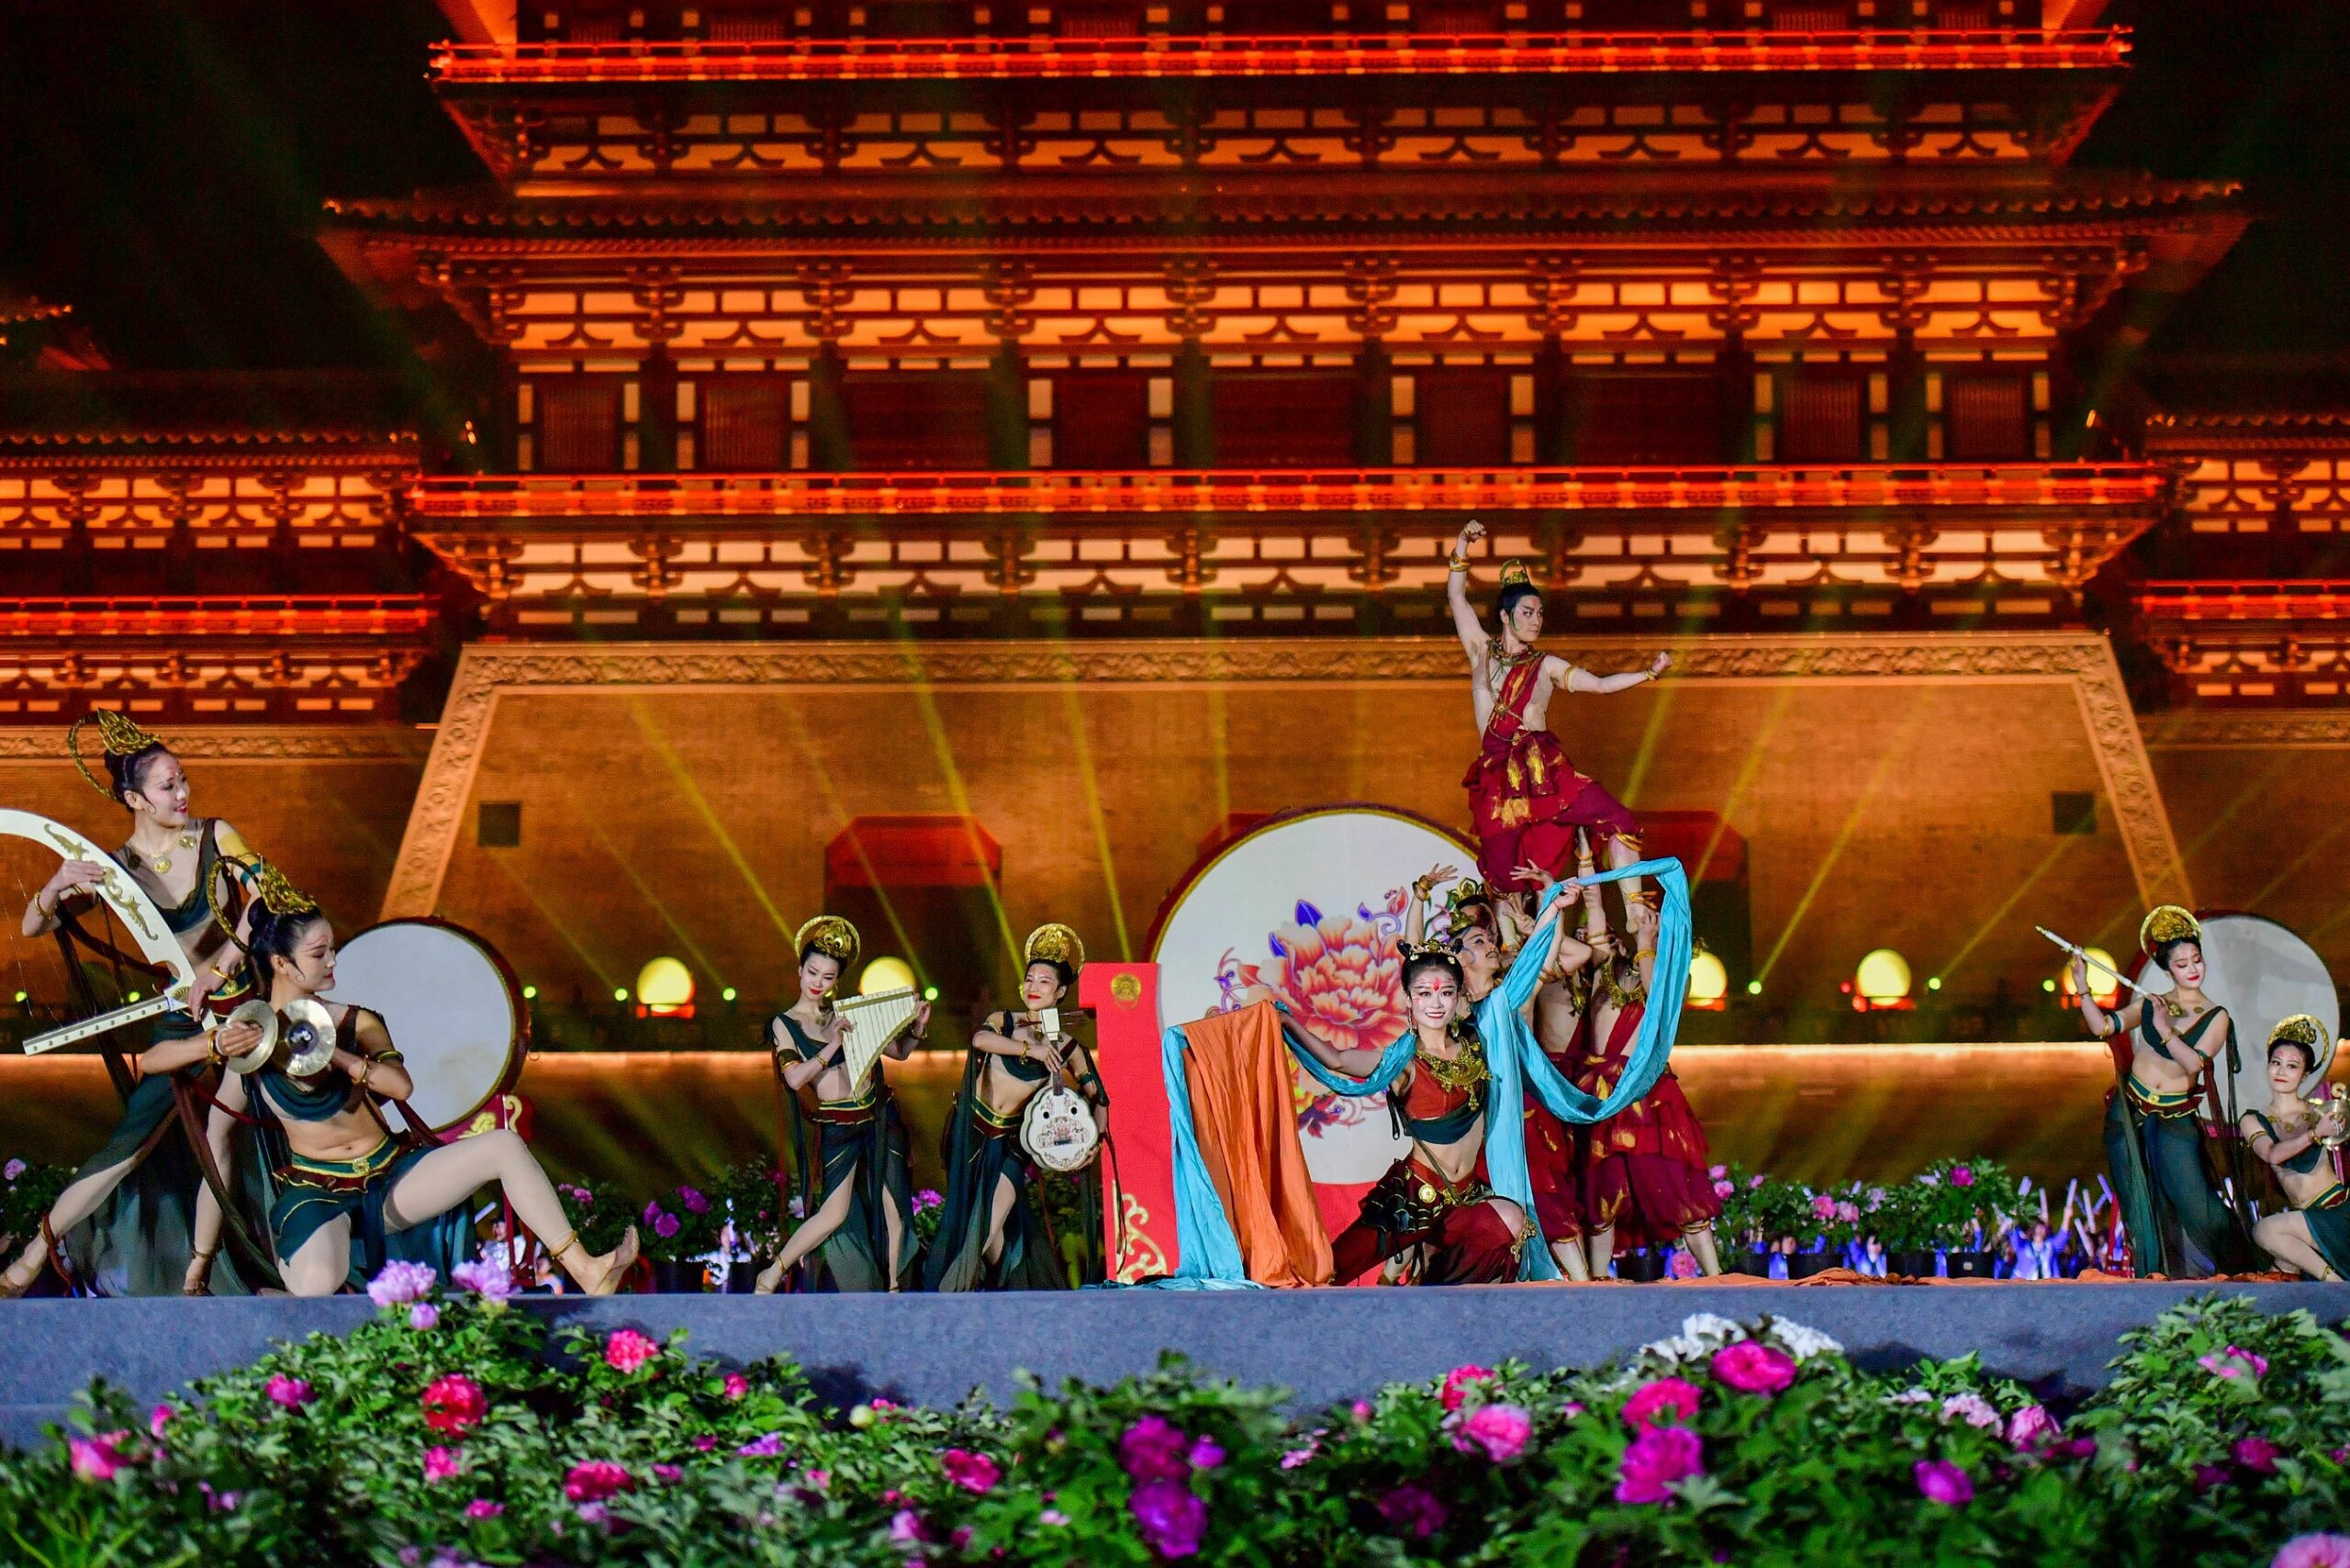 Xinhua Silk Road: เทศกาลวัฒนธรรมดอกโบตั๋นเมืองลั่วหยาง ครั้งที่ 40 จัดพิธีเปิดงานชมดอกโบตั๋นสุดยิ่งใหญ่ที่มณฑลเหอหนาน